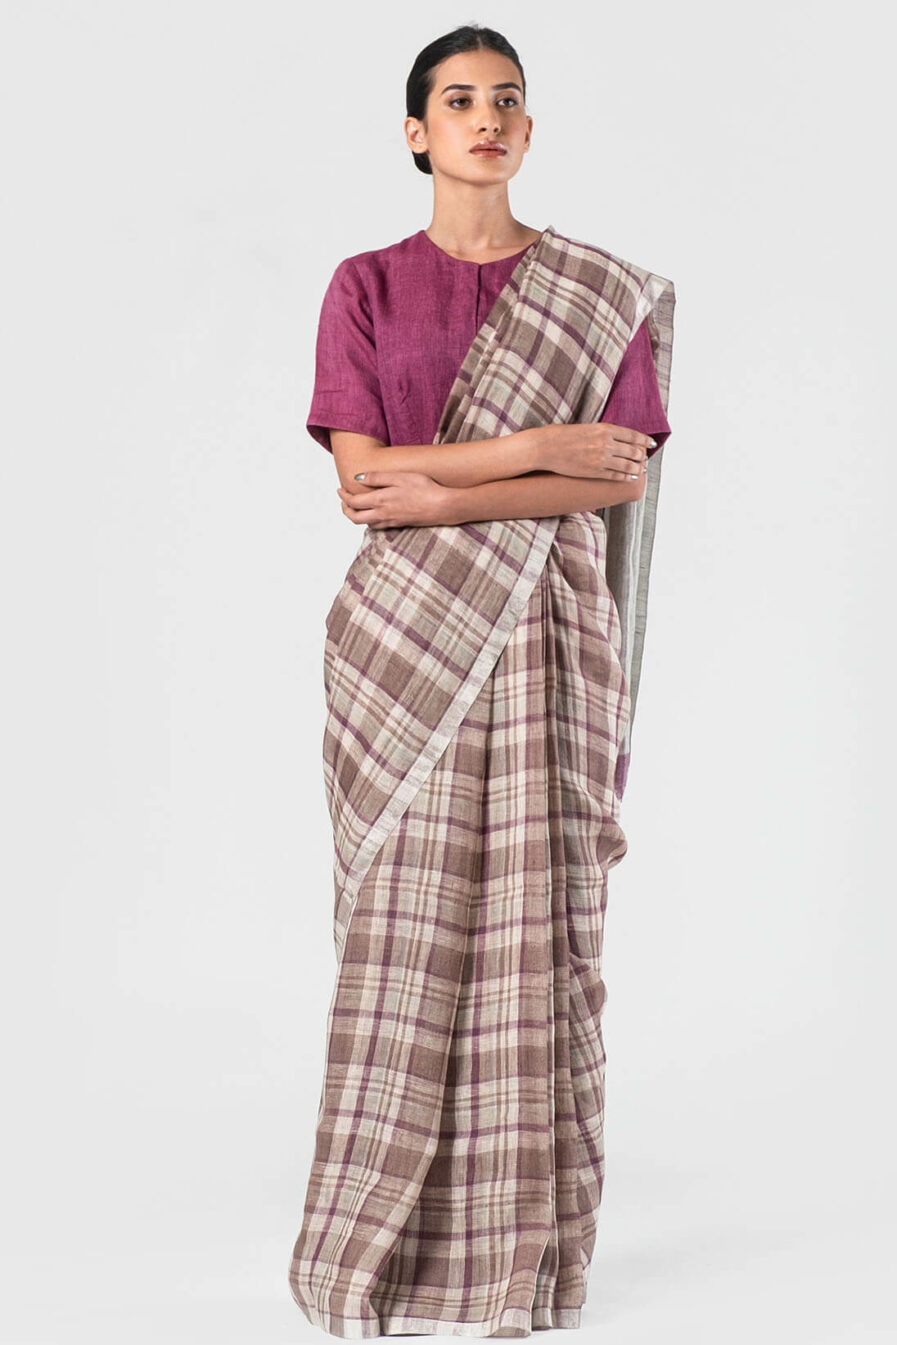 Anavila Khaki-purple Summer plaid sari